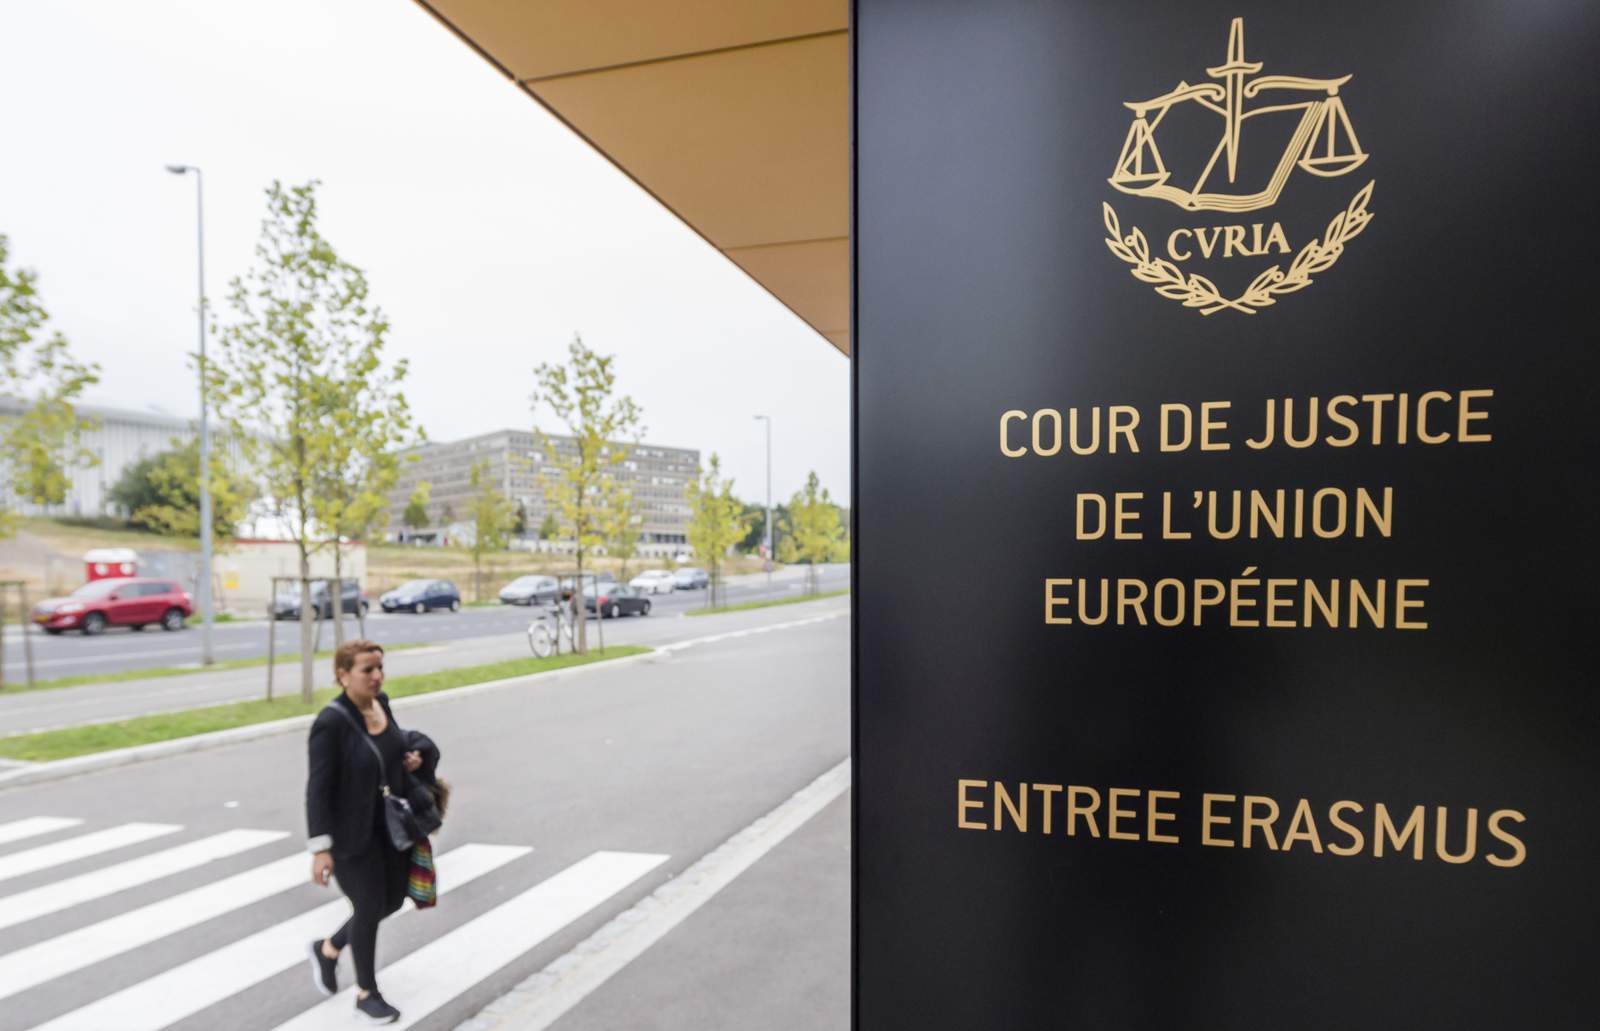 EU takes Poland to court over judicial independence concerns